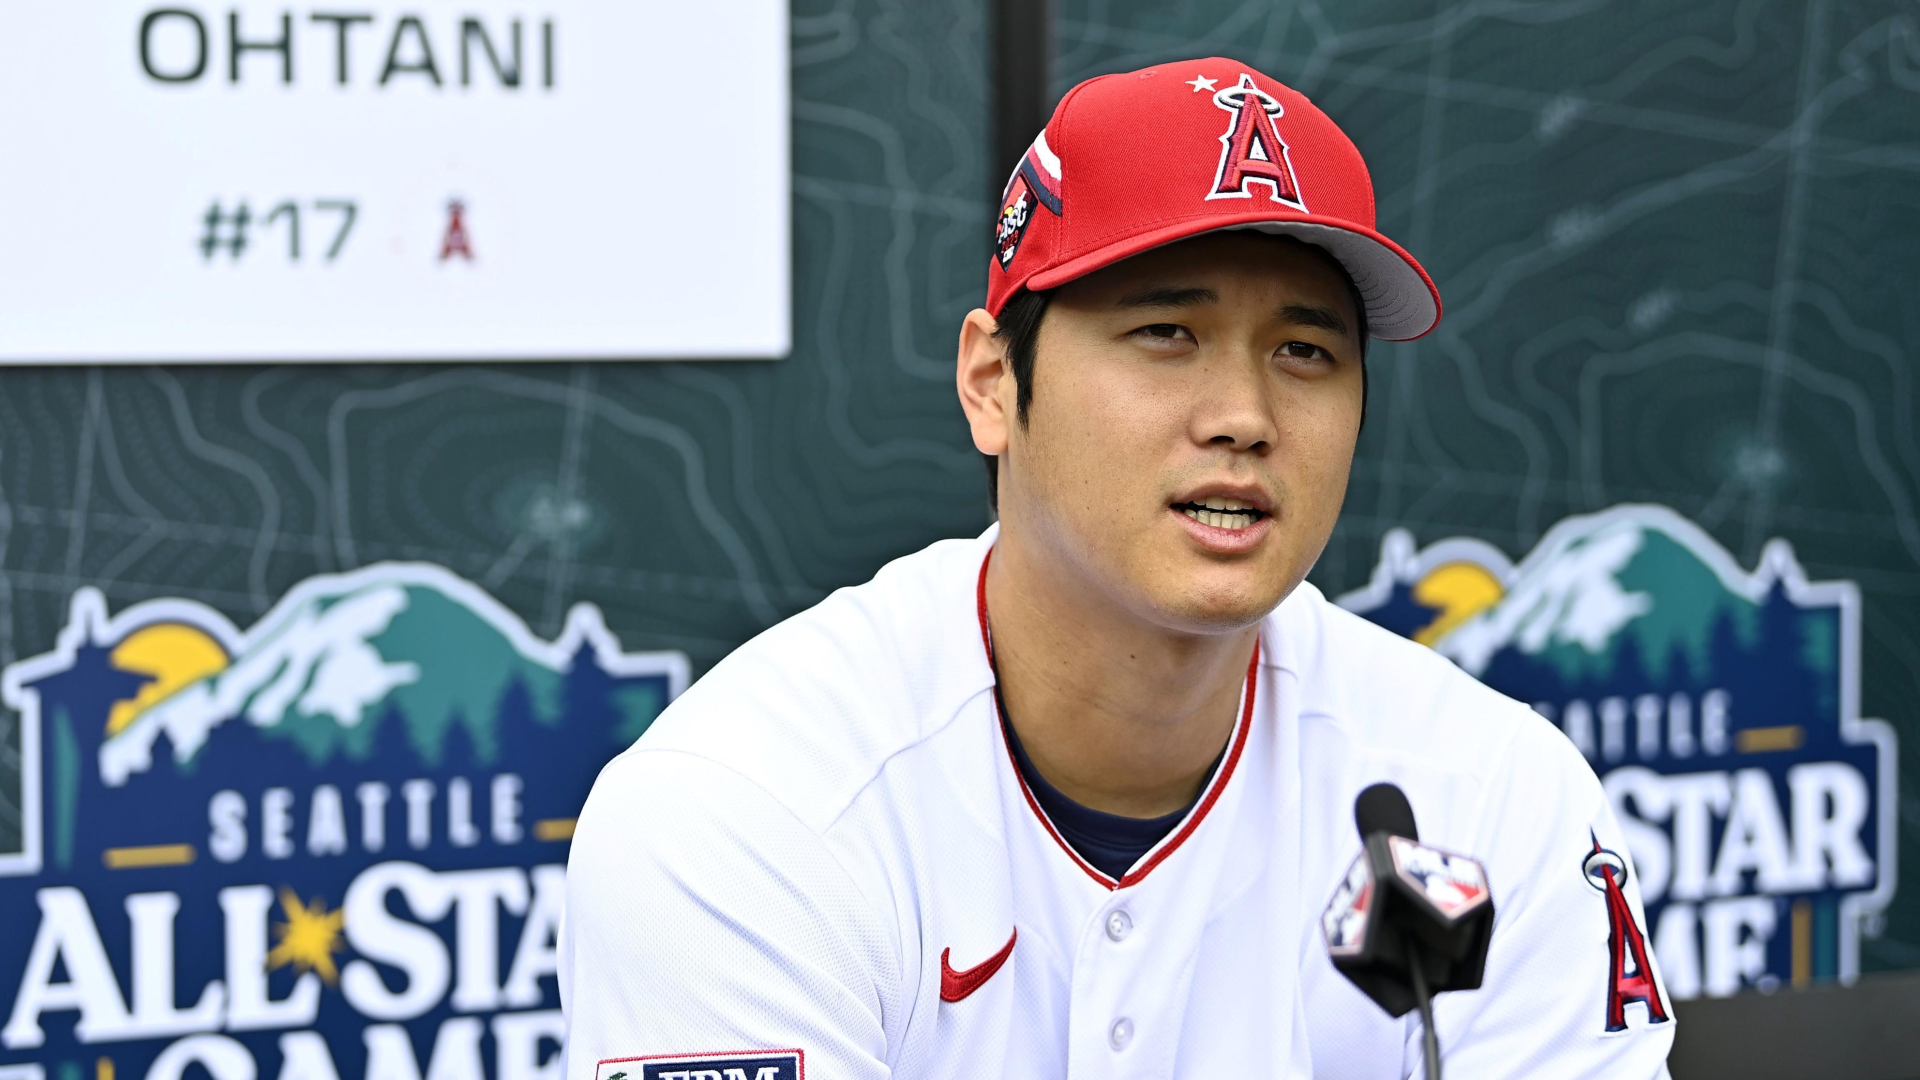 Angels' Shohei Ohtani tops MLB's most popular jerseys; Ronald